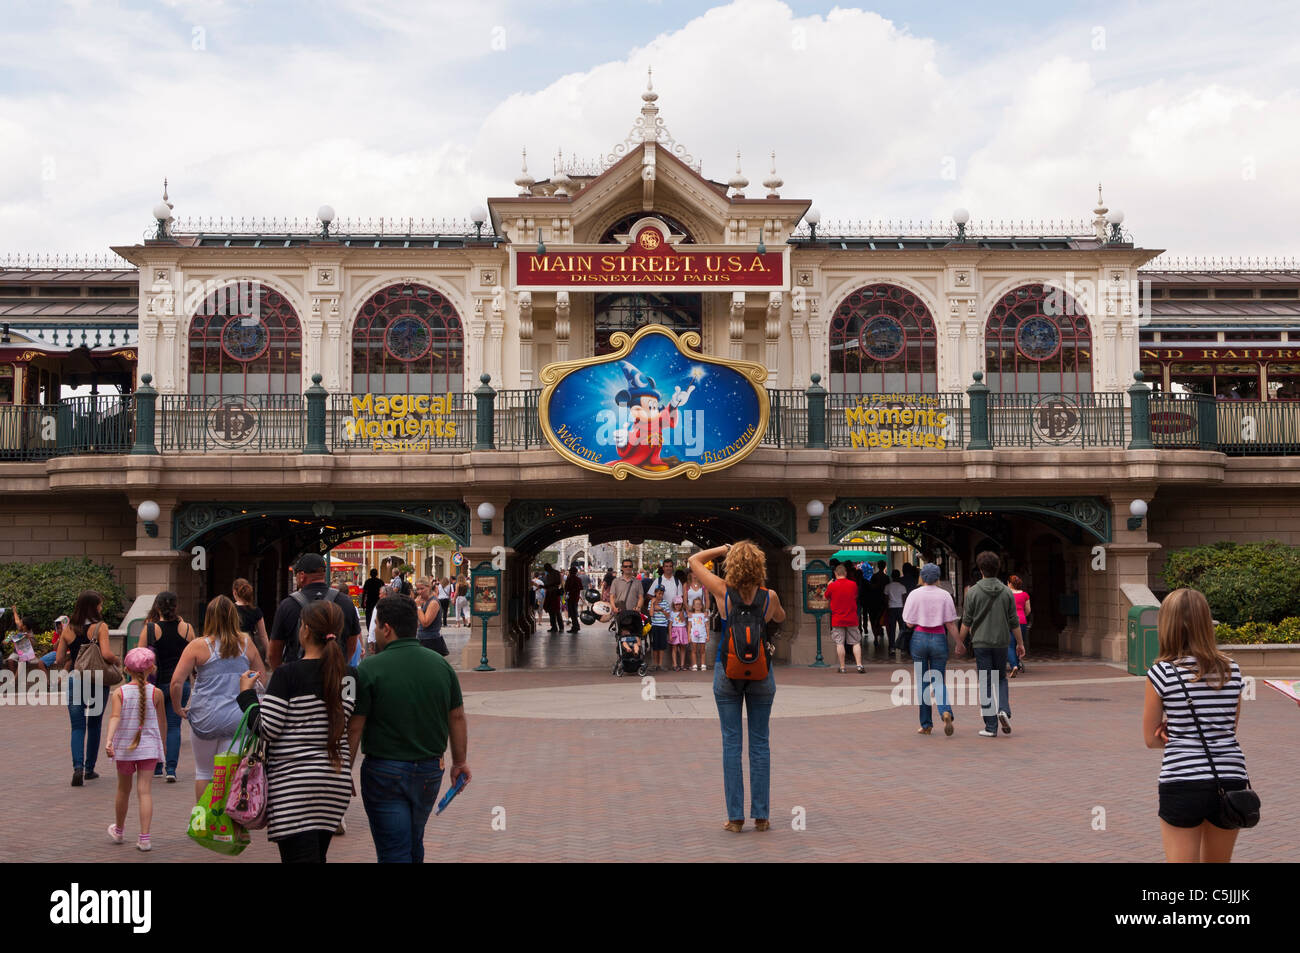 The Main Street Usa Railway Station At Disneyland Paris In France Stock